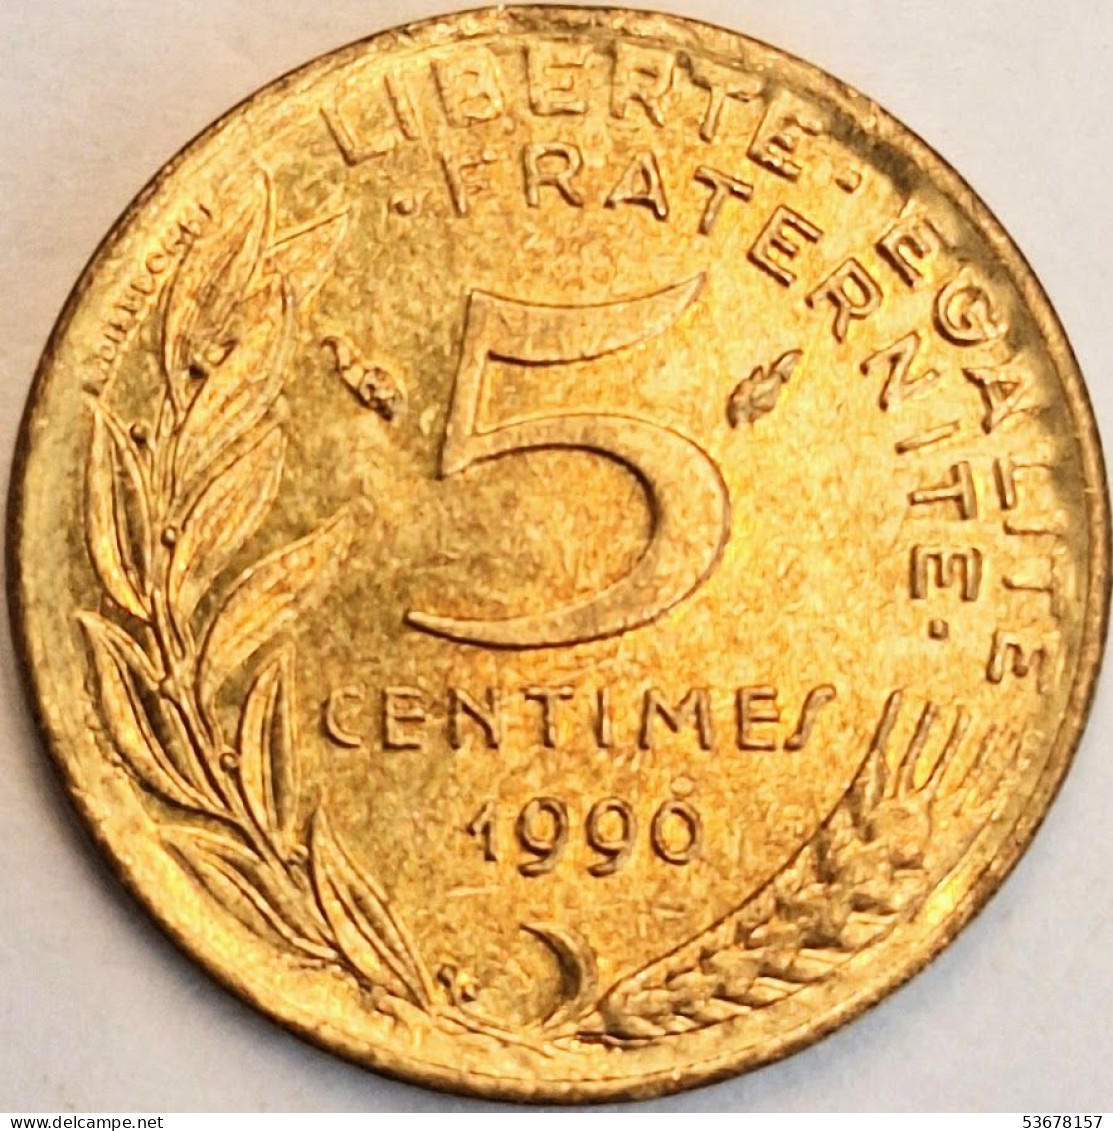 France - 5 Centimes 1990, KM# 933 (#4206) - 5 Centimes